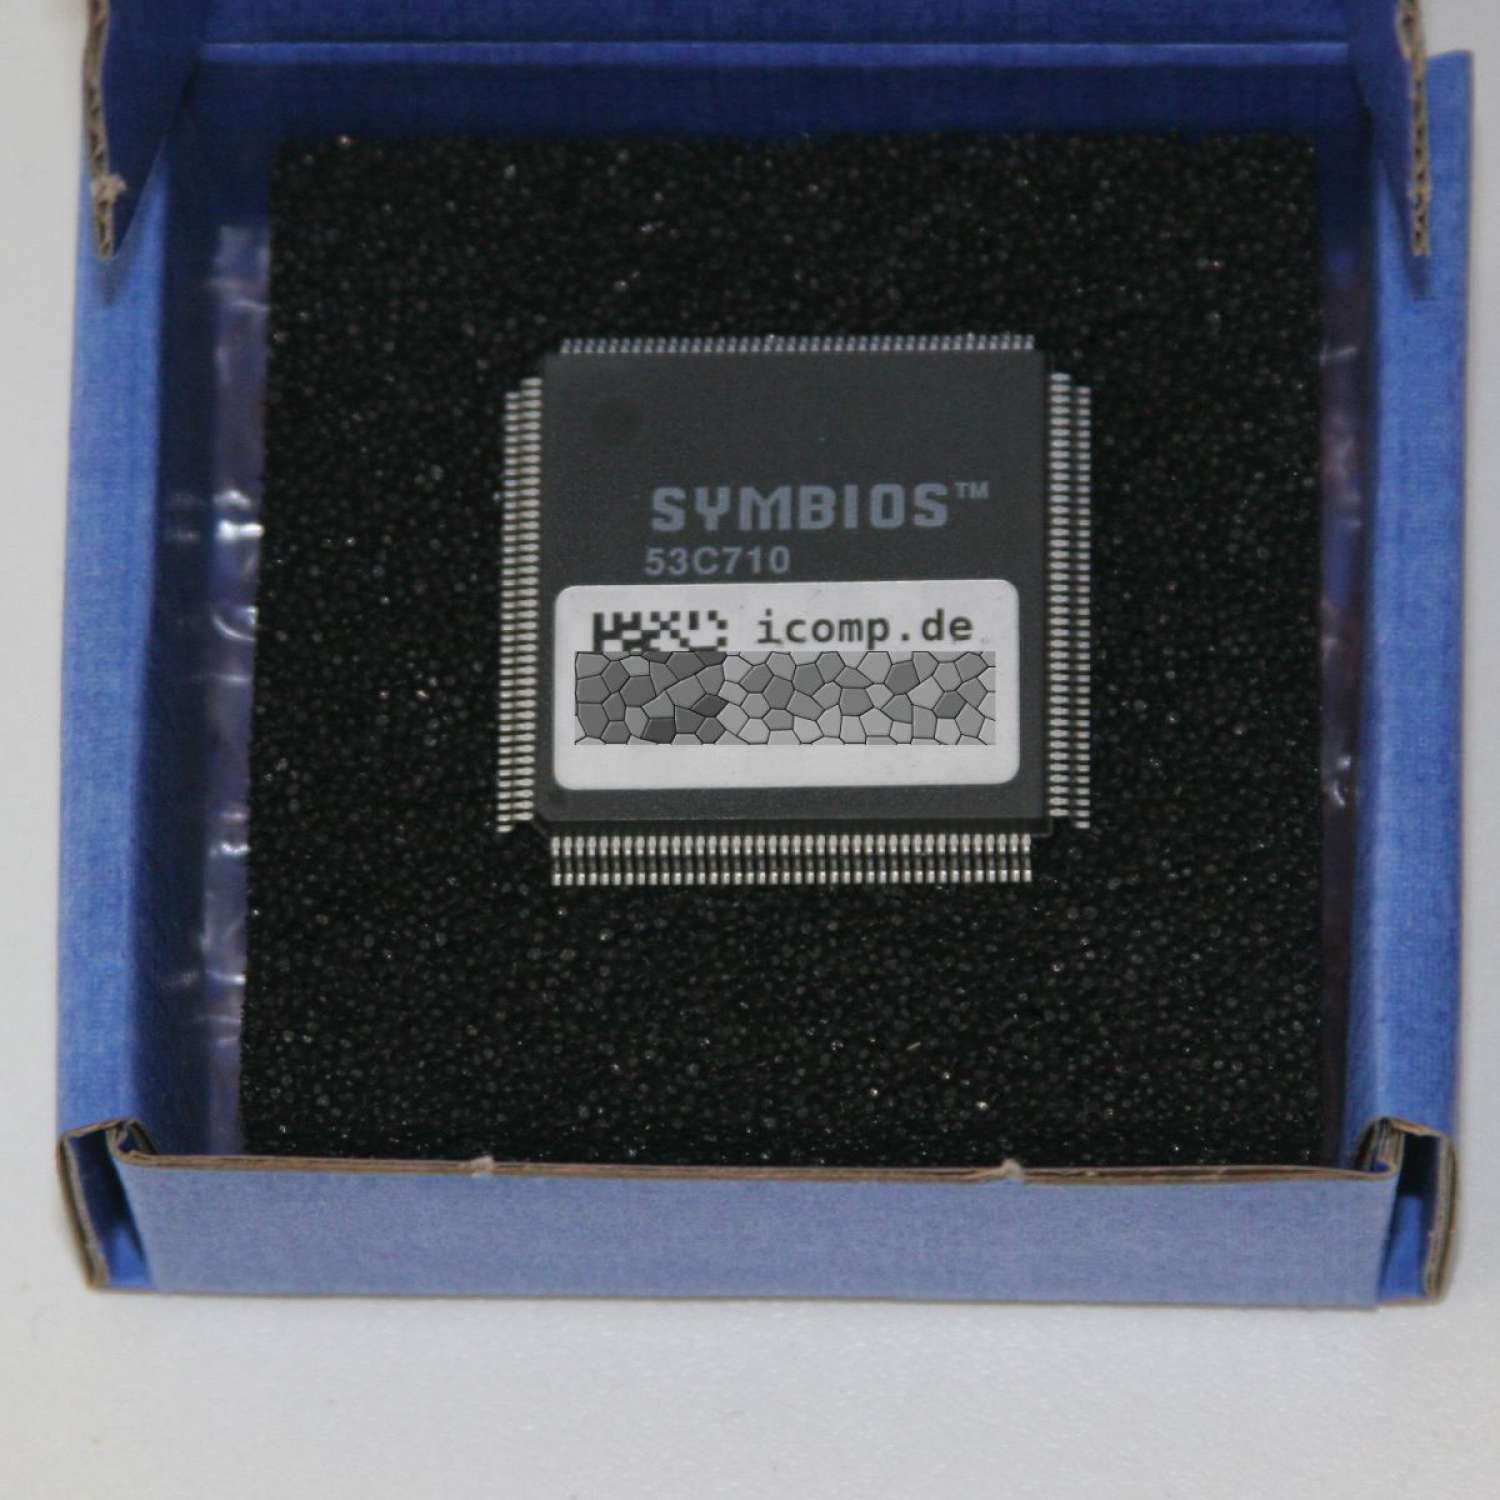 Symbios SCSI new old stock